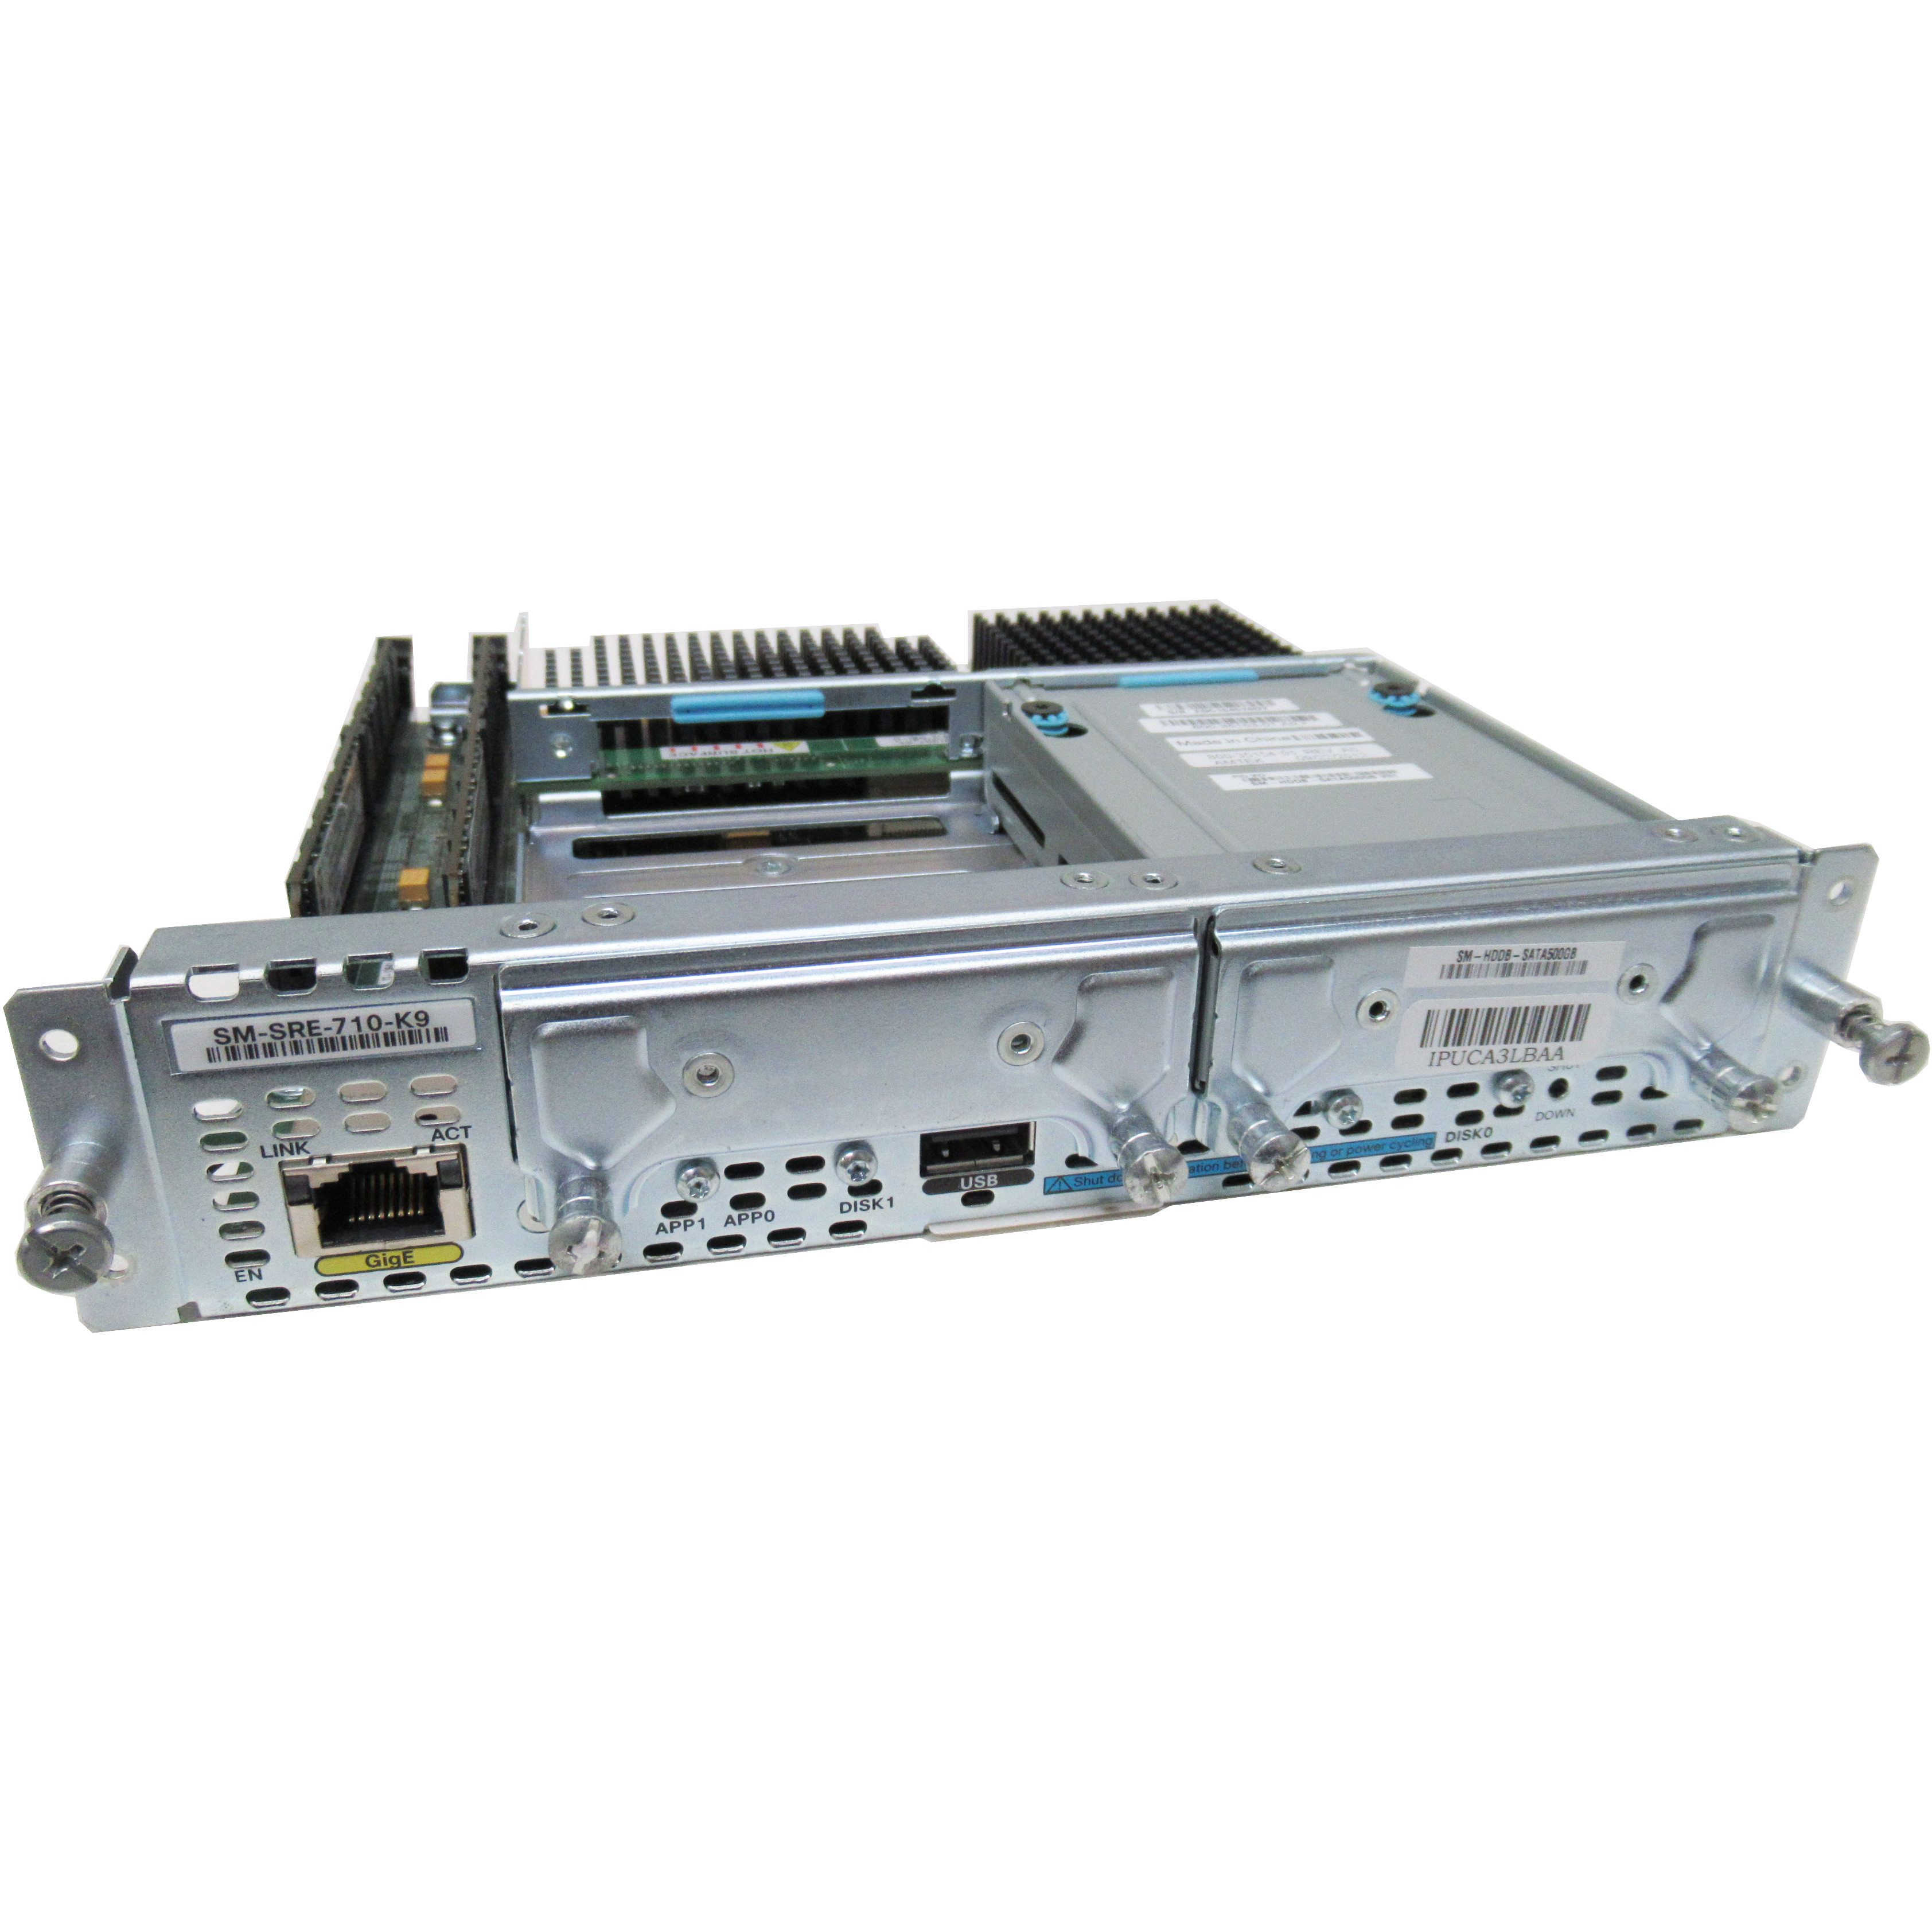 Cisco SM-SRE-710-K9